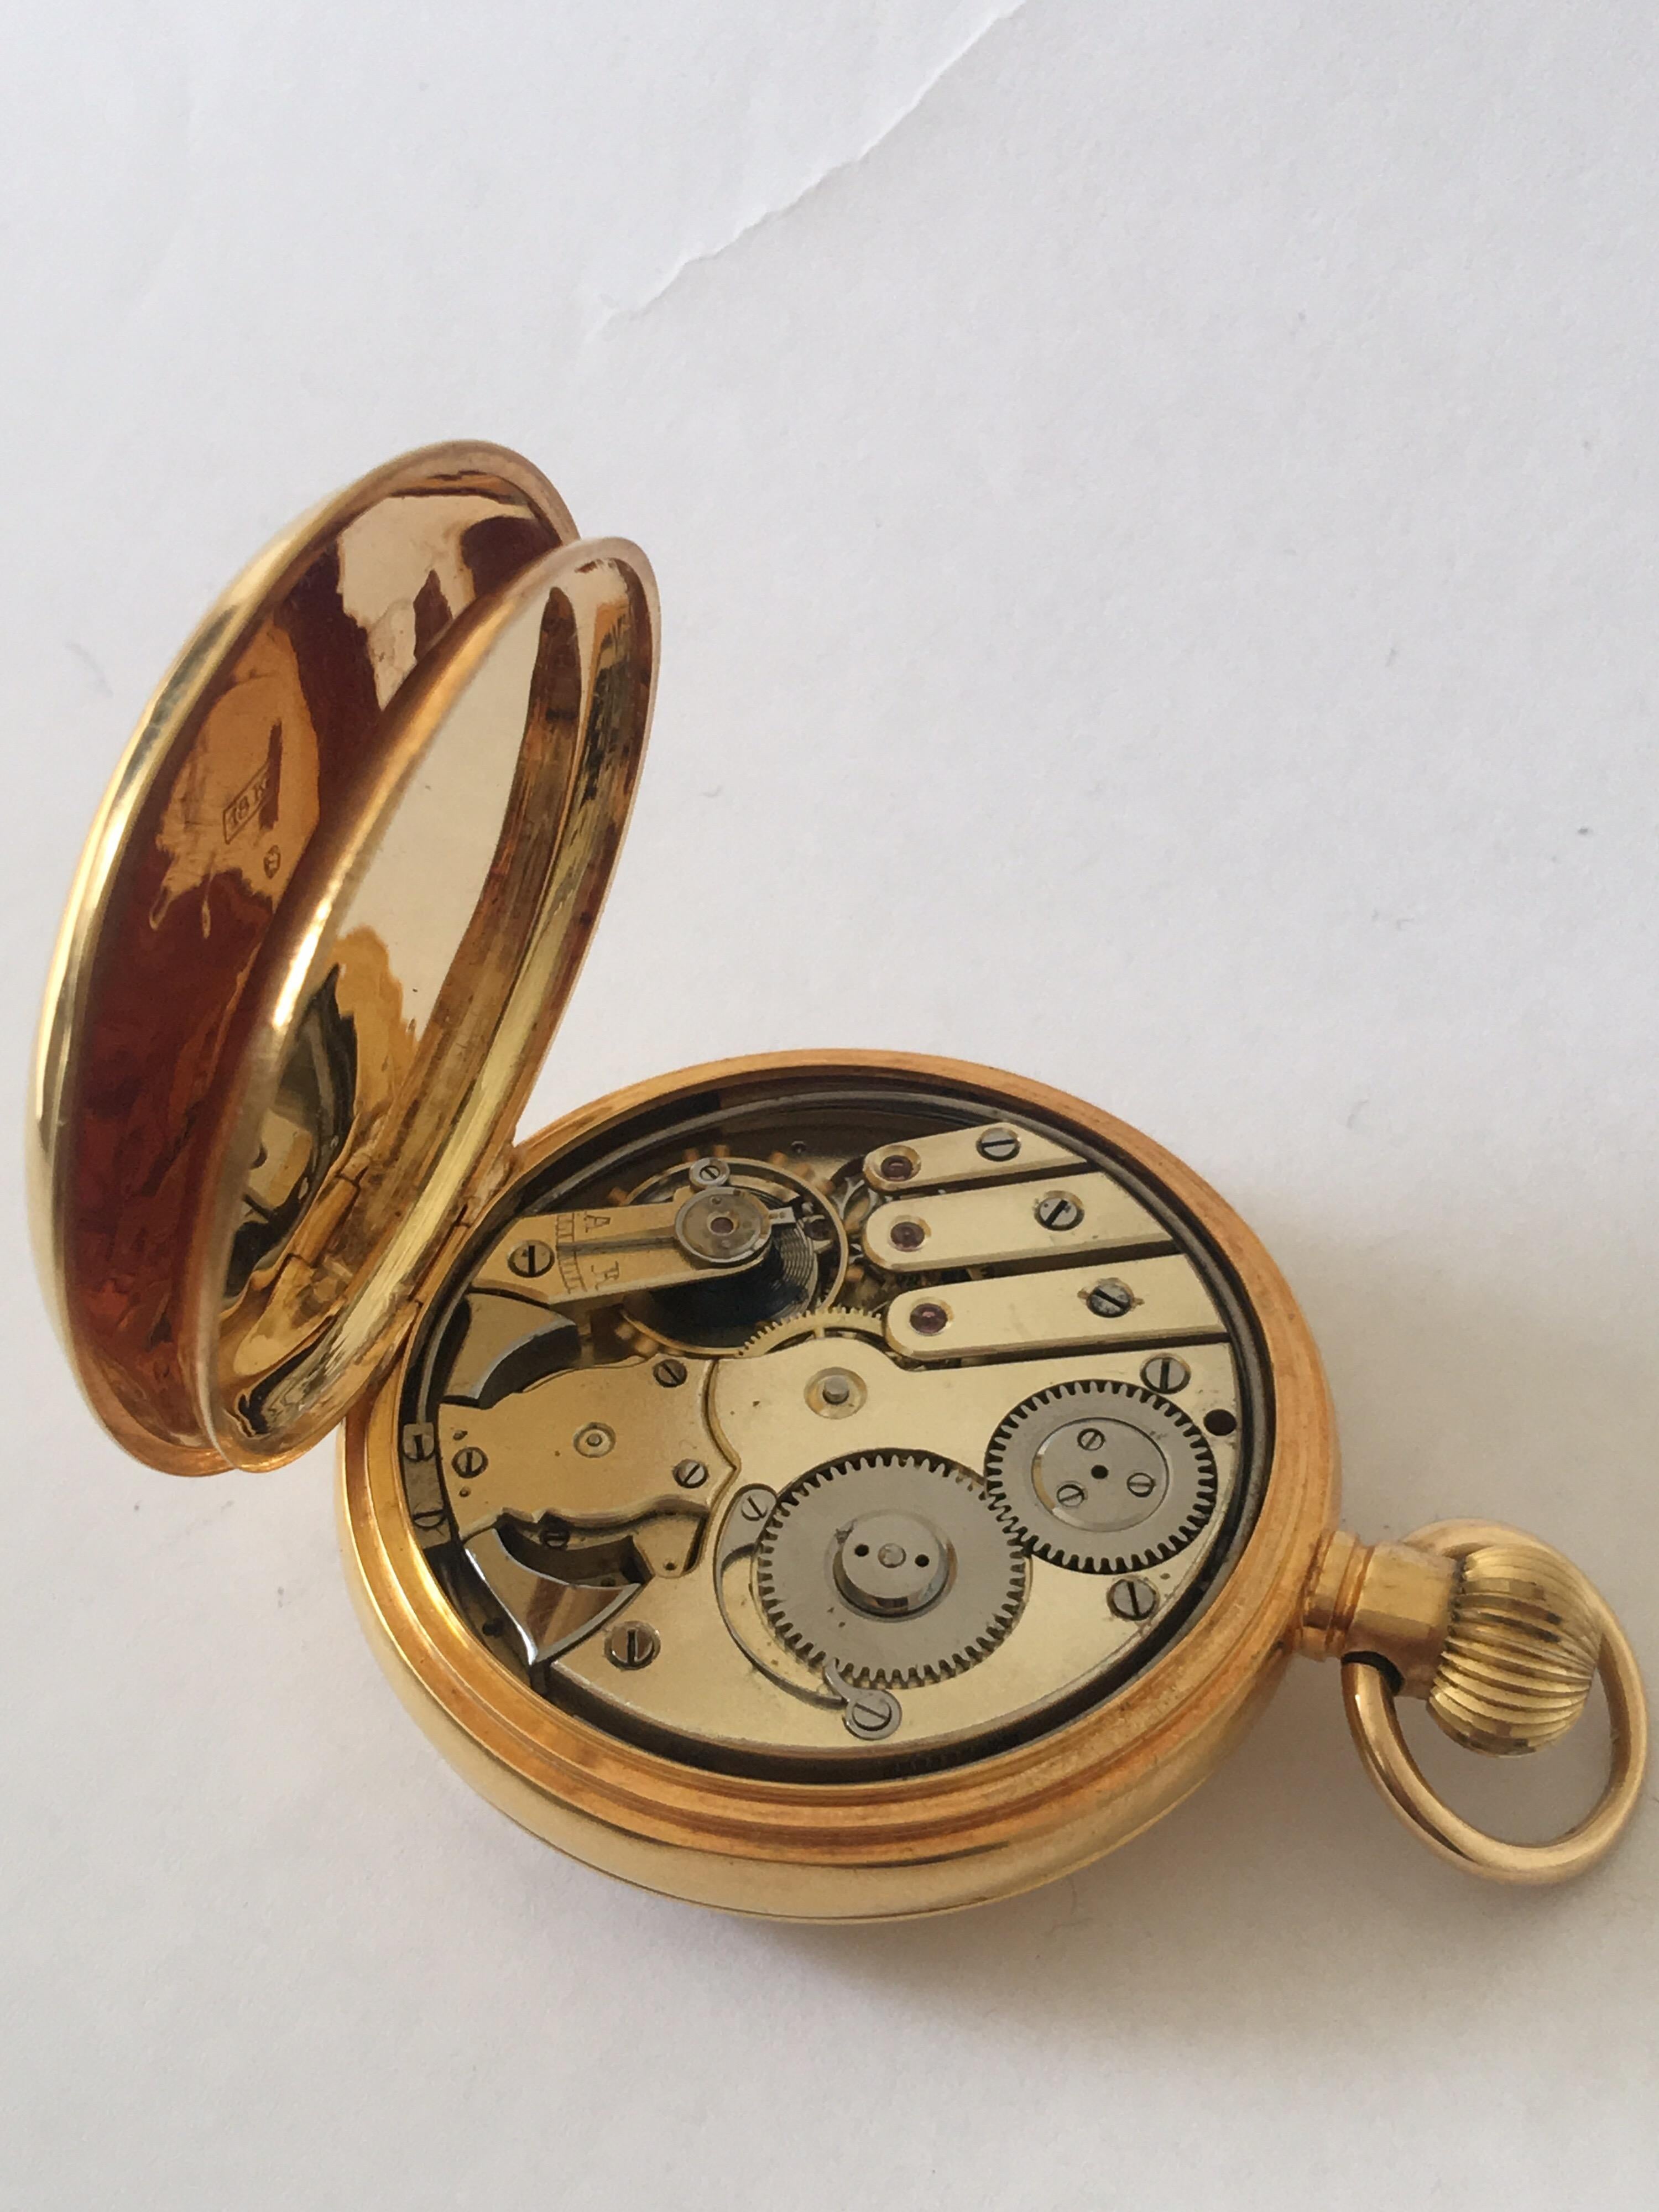 18k gold pocket watch